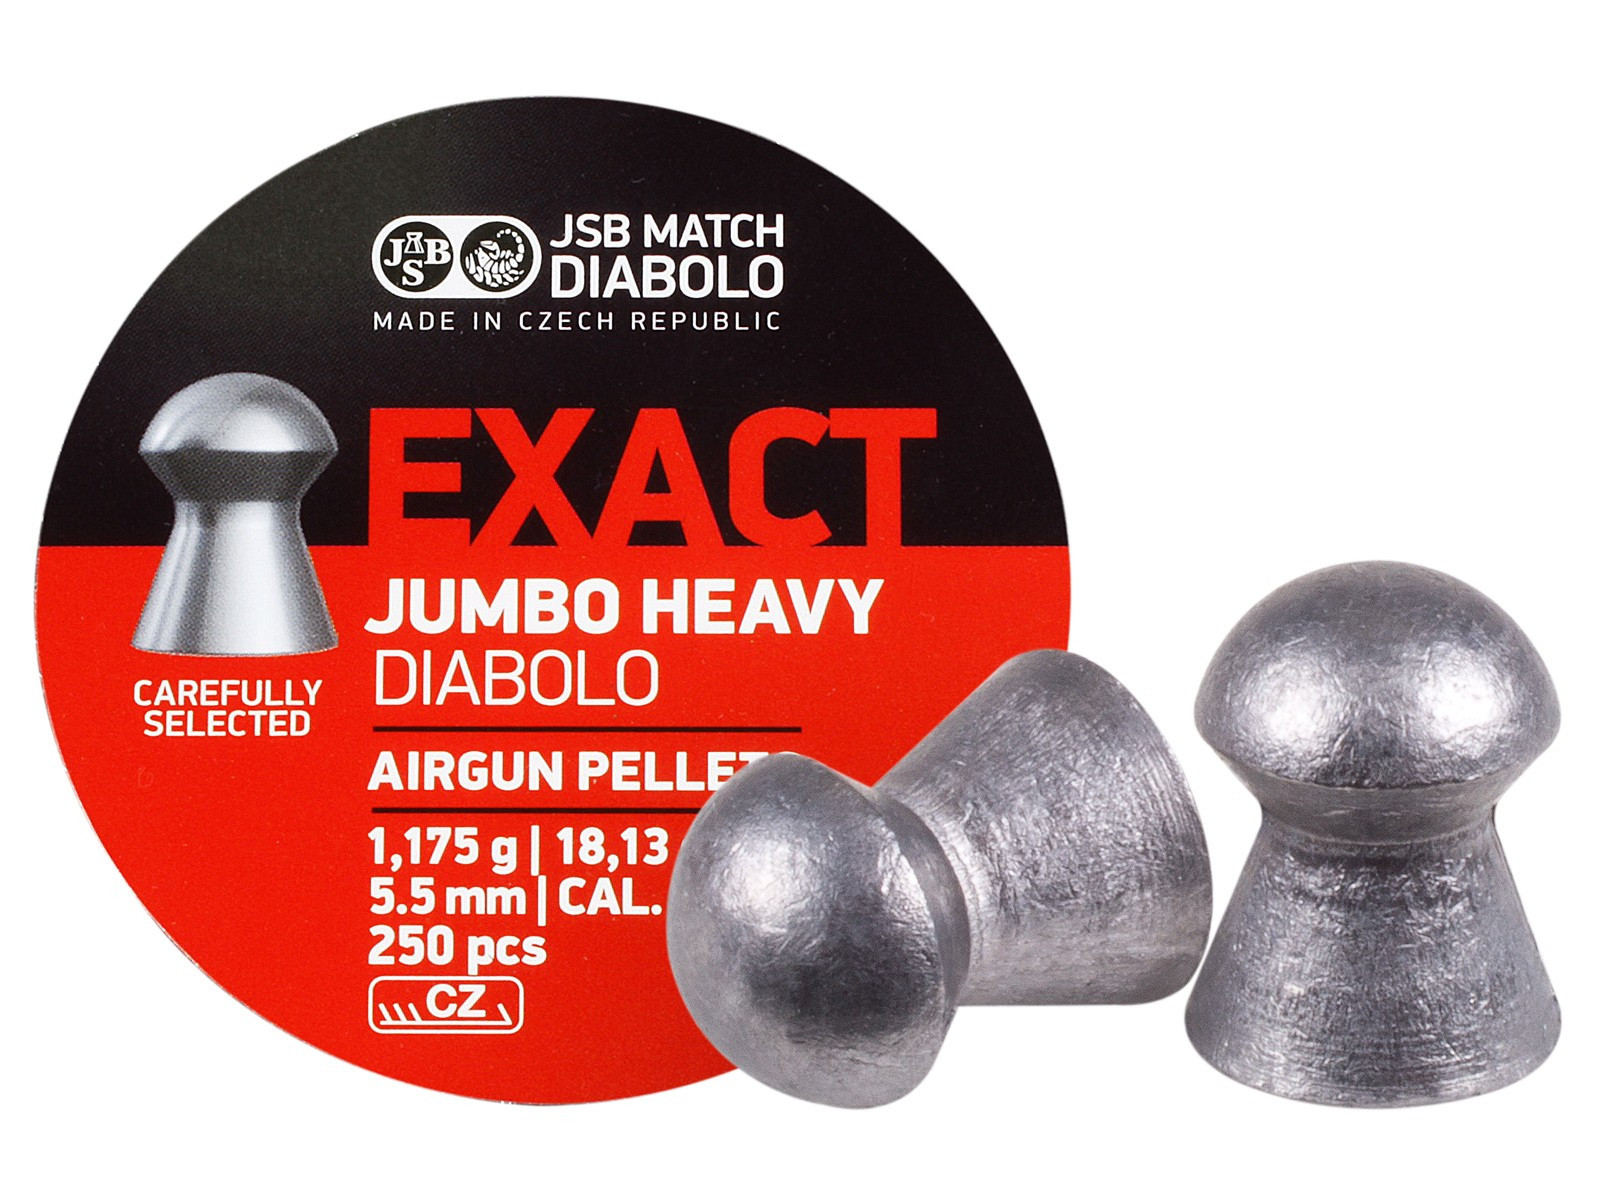 JSB Diabolo Exact Jumbo Heavy .22 Cal, 18.13 gr - 250 ct